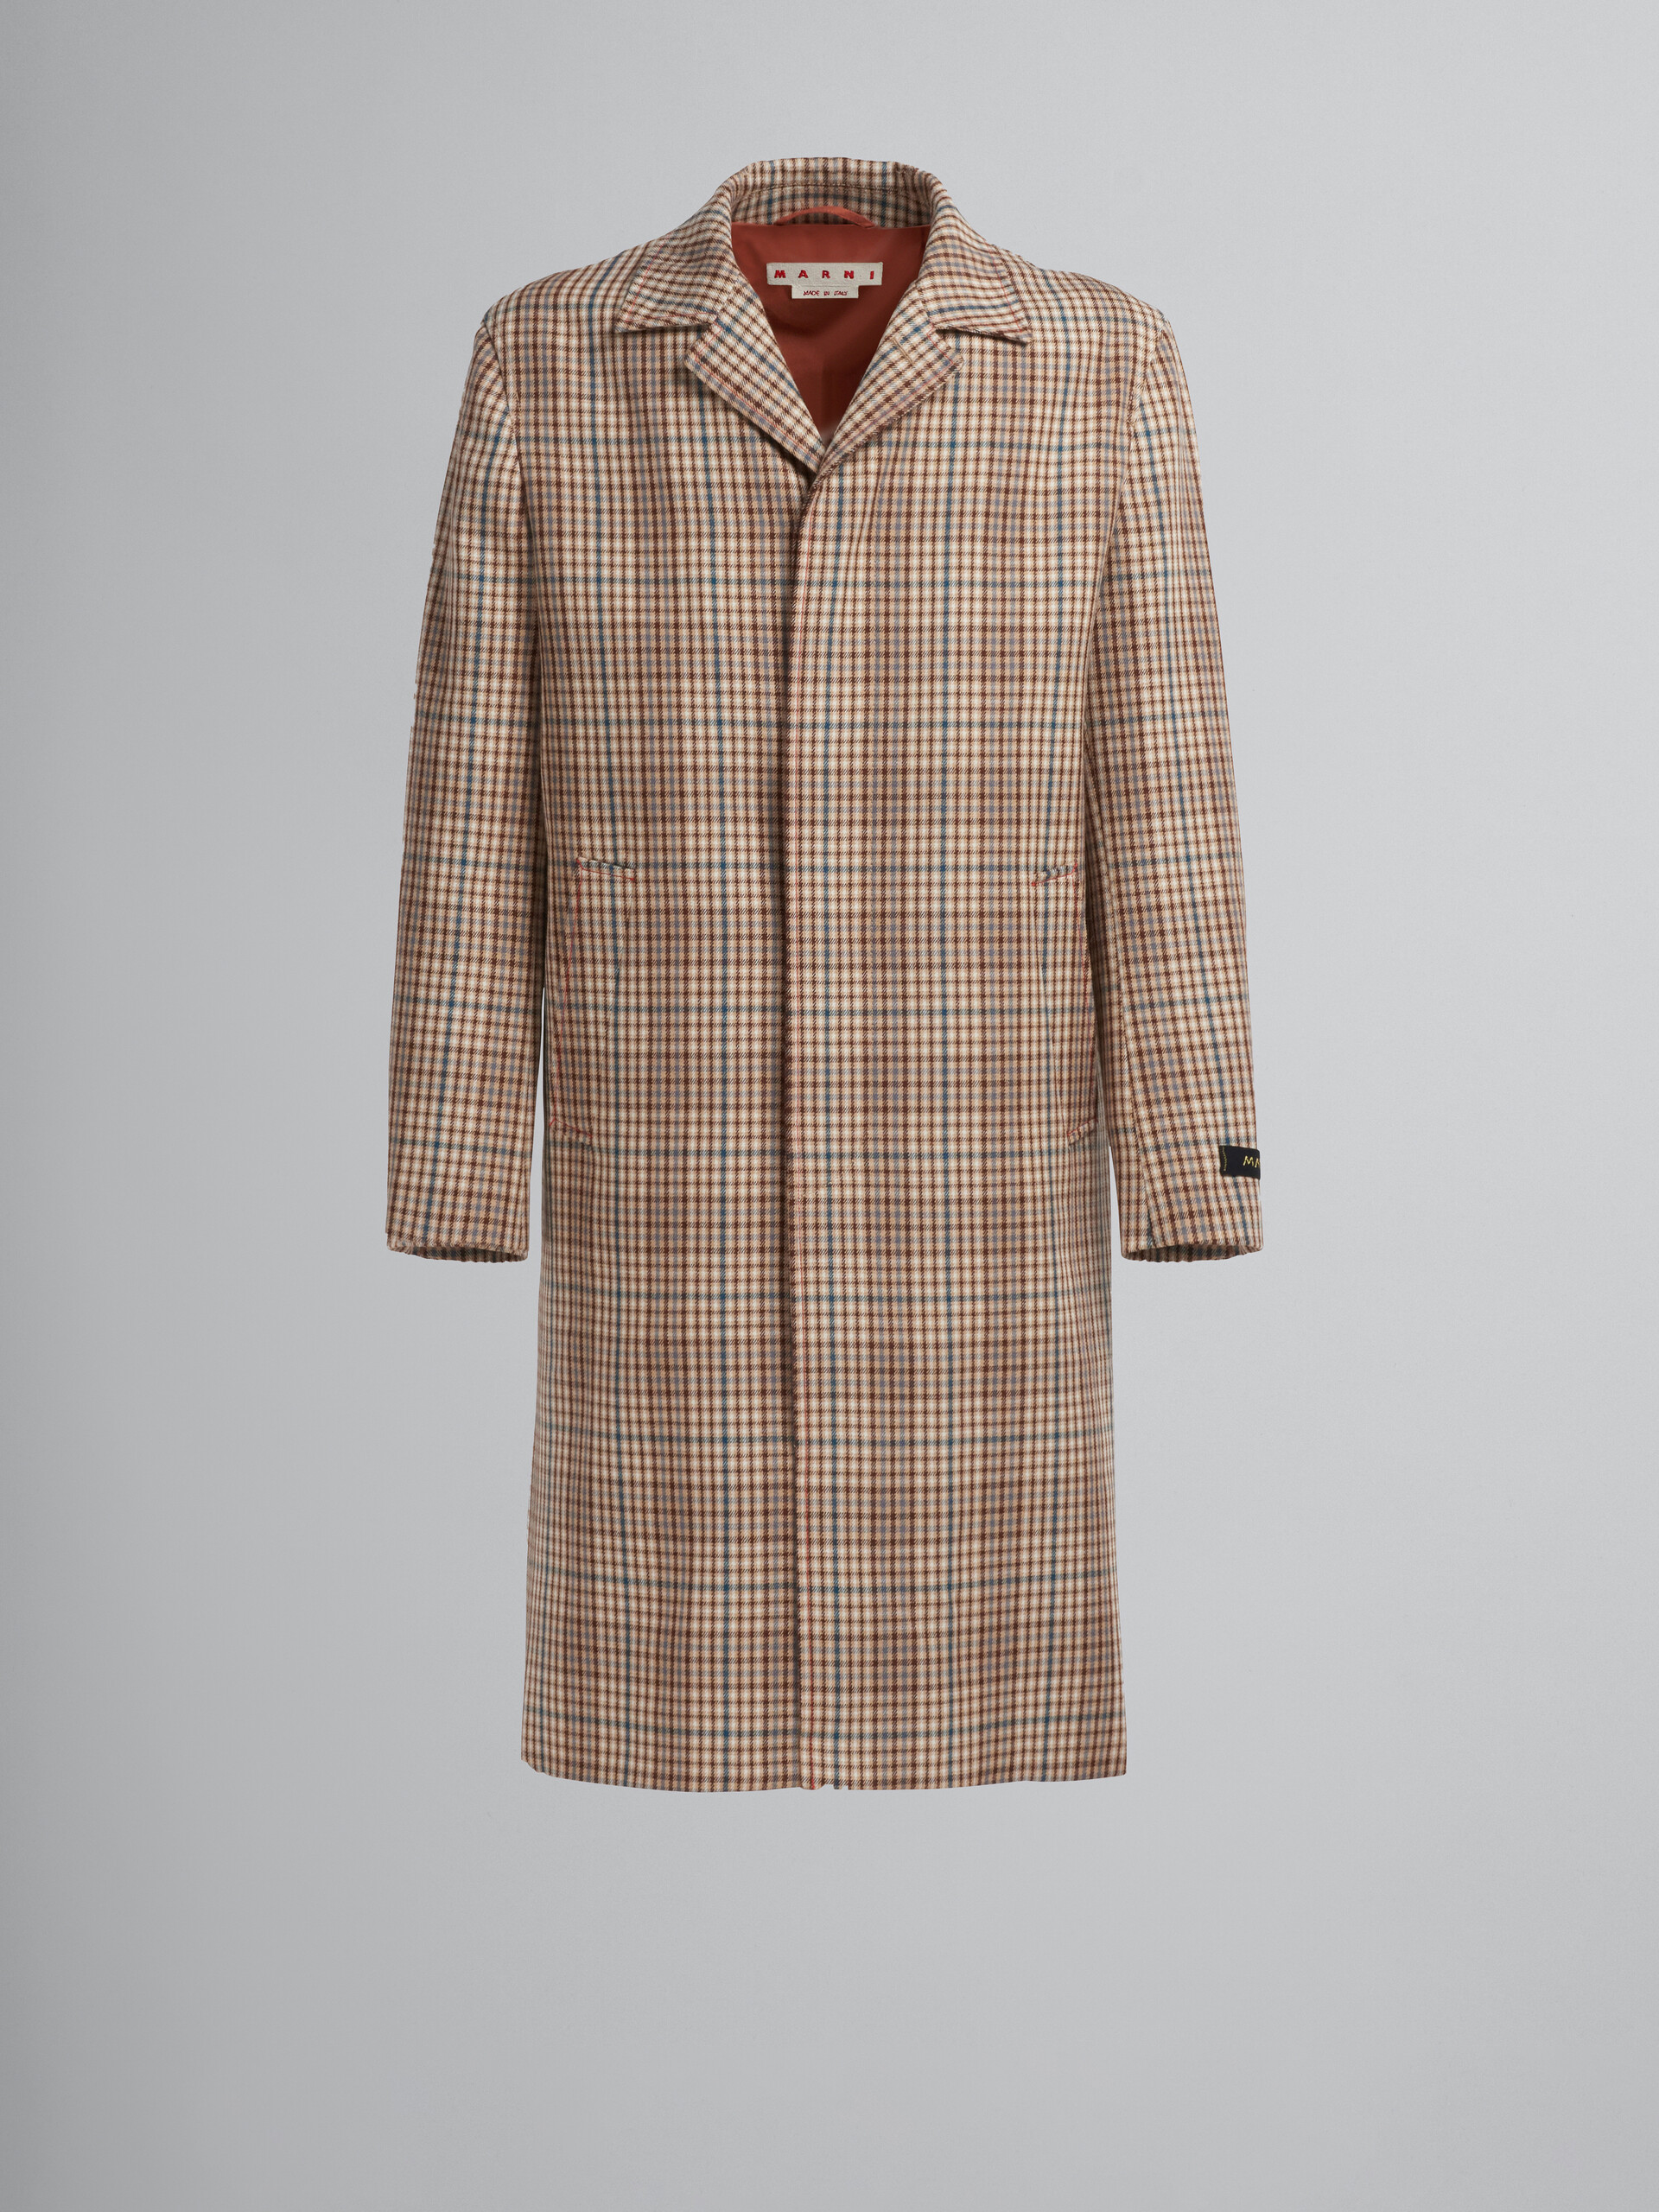 Langer Mantel aus beigefarben karierter Wolle - Mäntel - Image 1